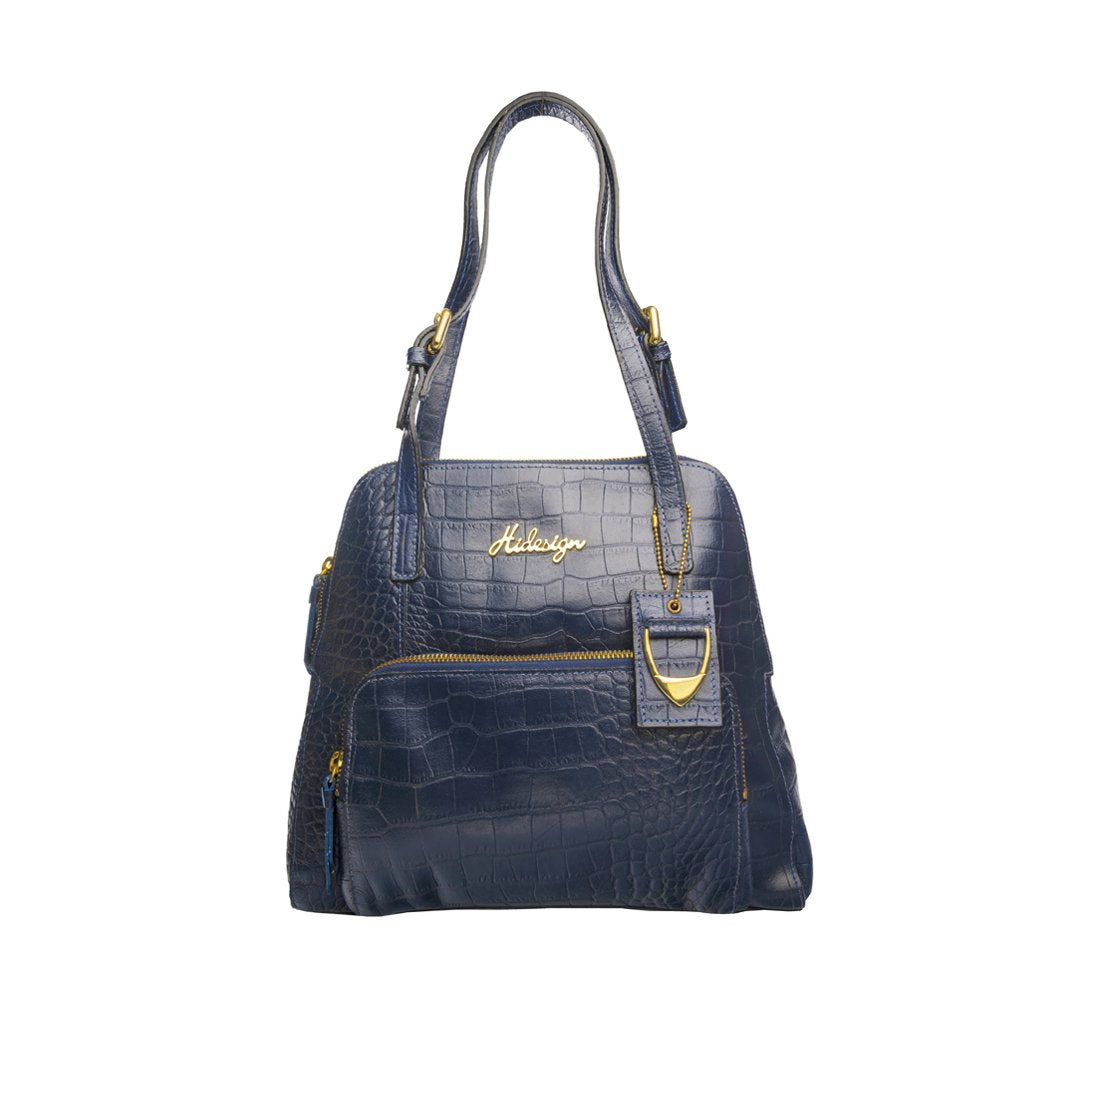 Buy Hidesign Red Lotus SB Women's Handbags online